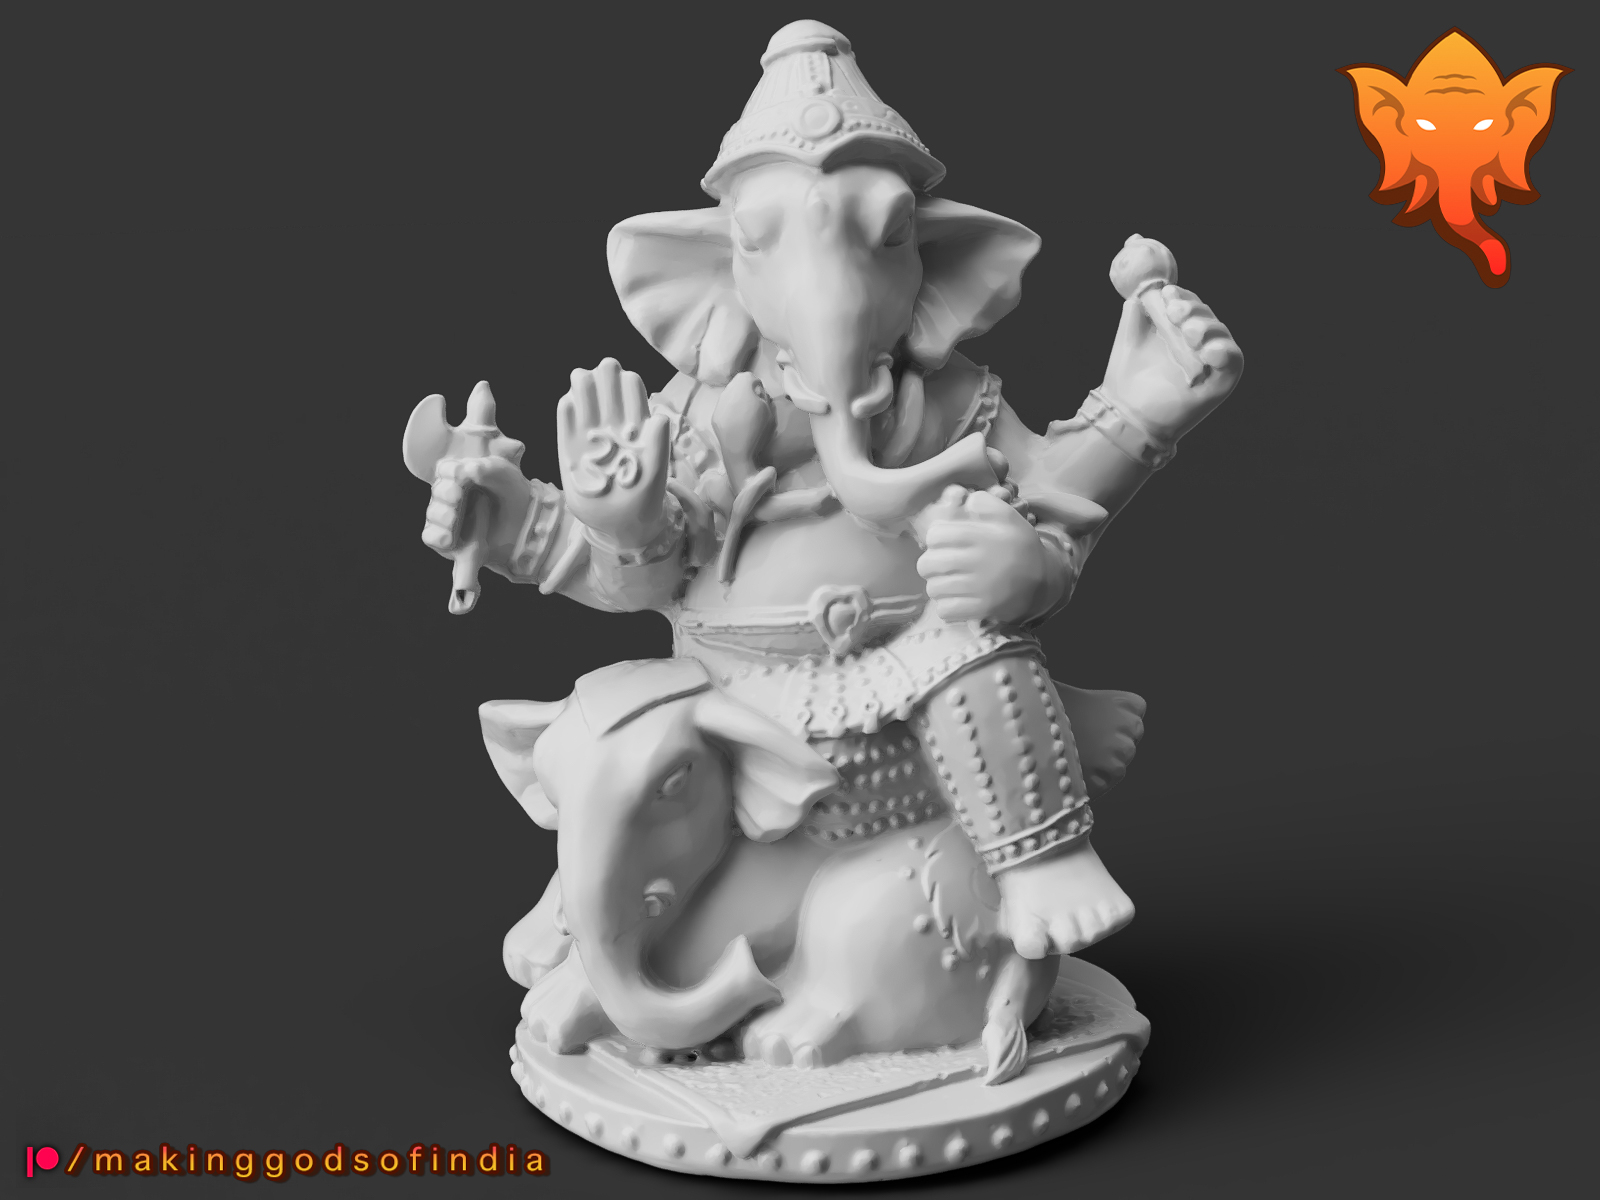 Mahotkata Ganesha Riding an Elephant